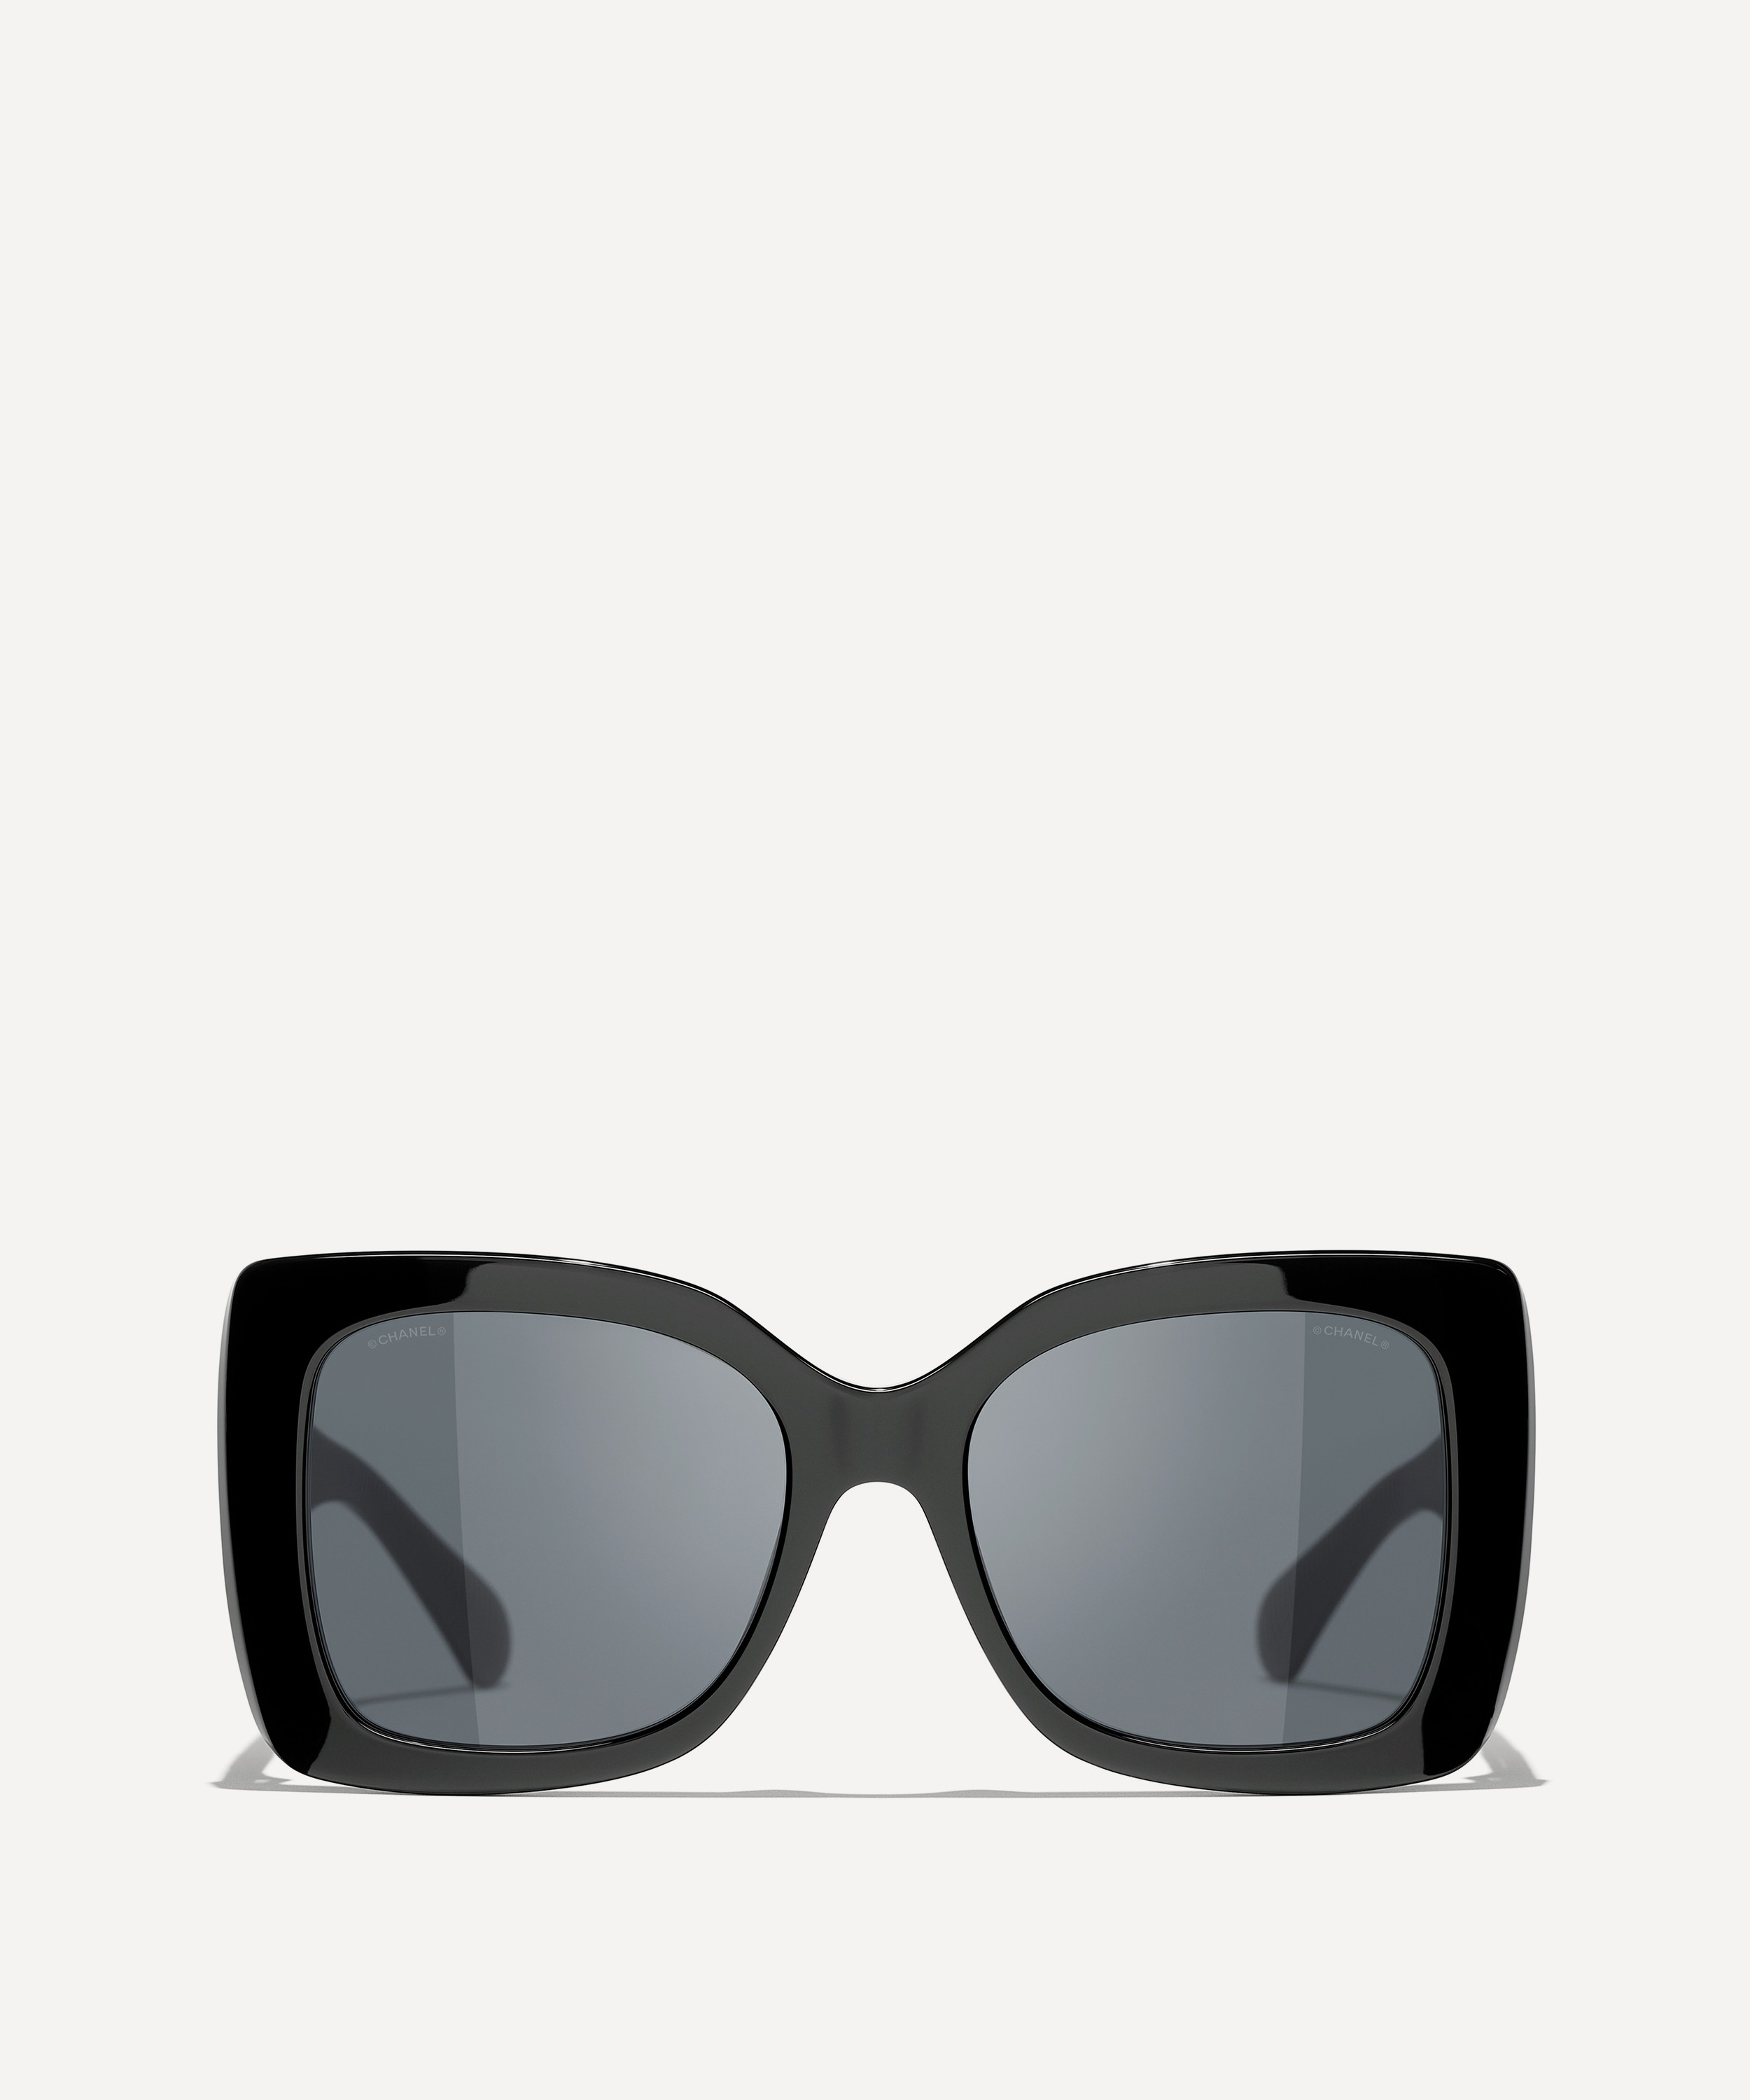 Chanel Black 5227 Oversized Square Sunglasses Chanel | The Luxury Closet